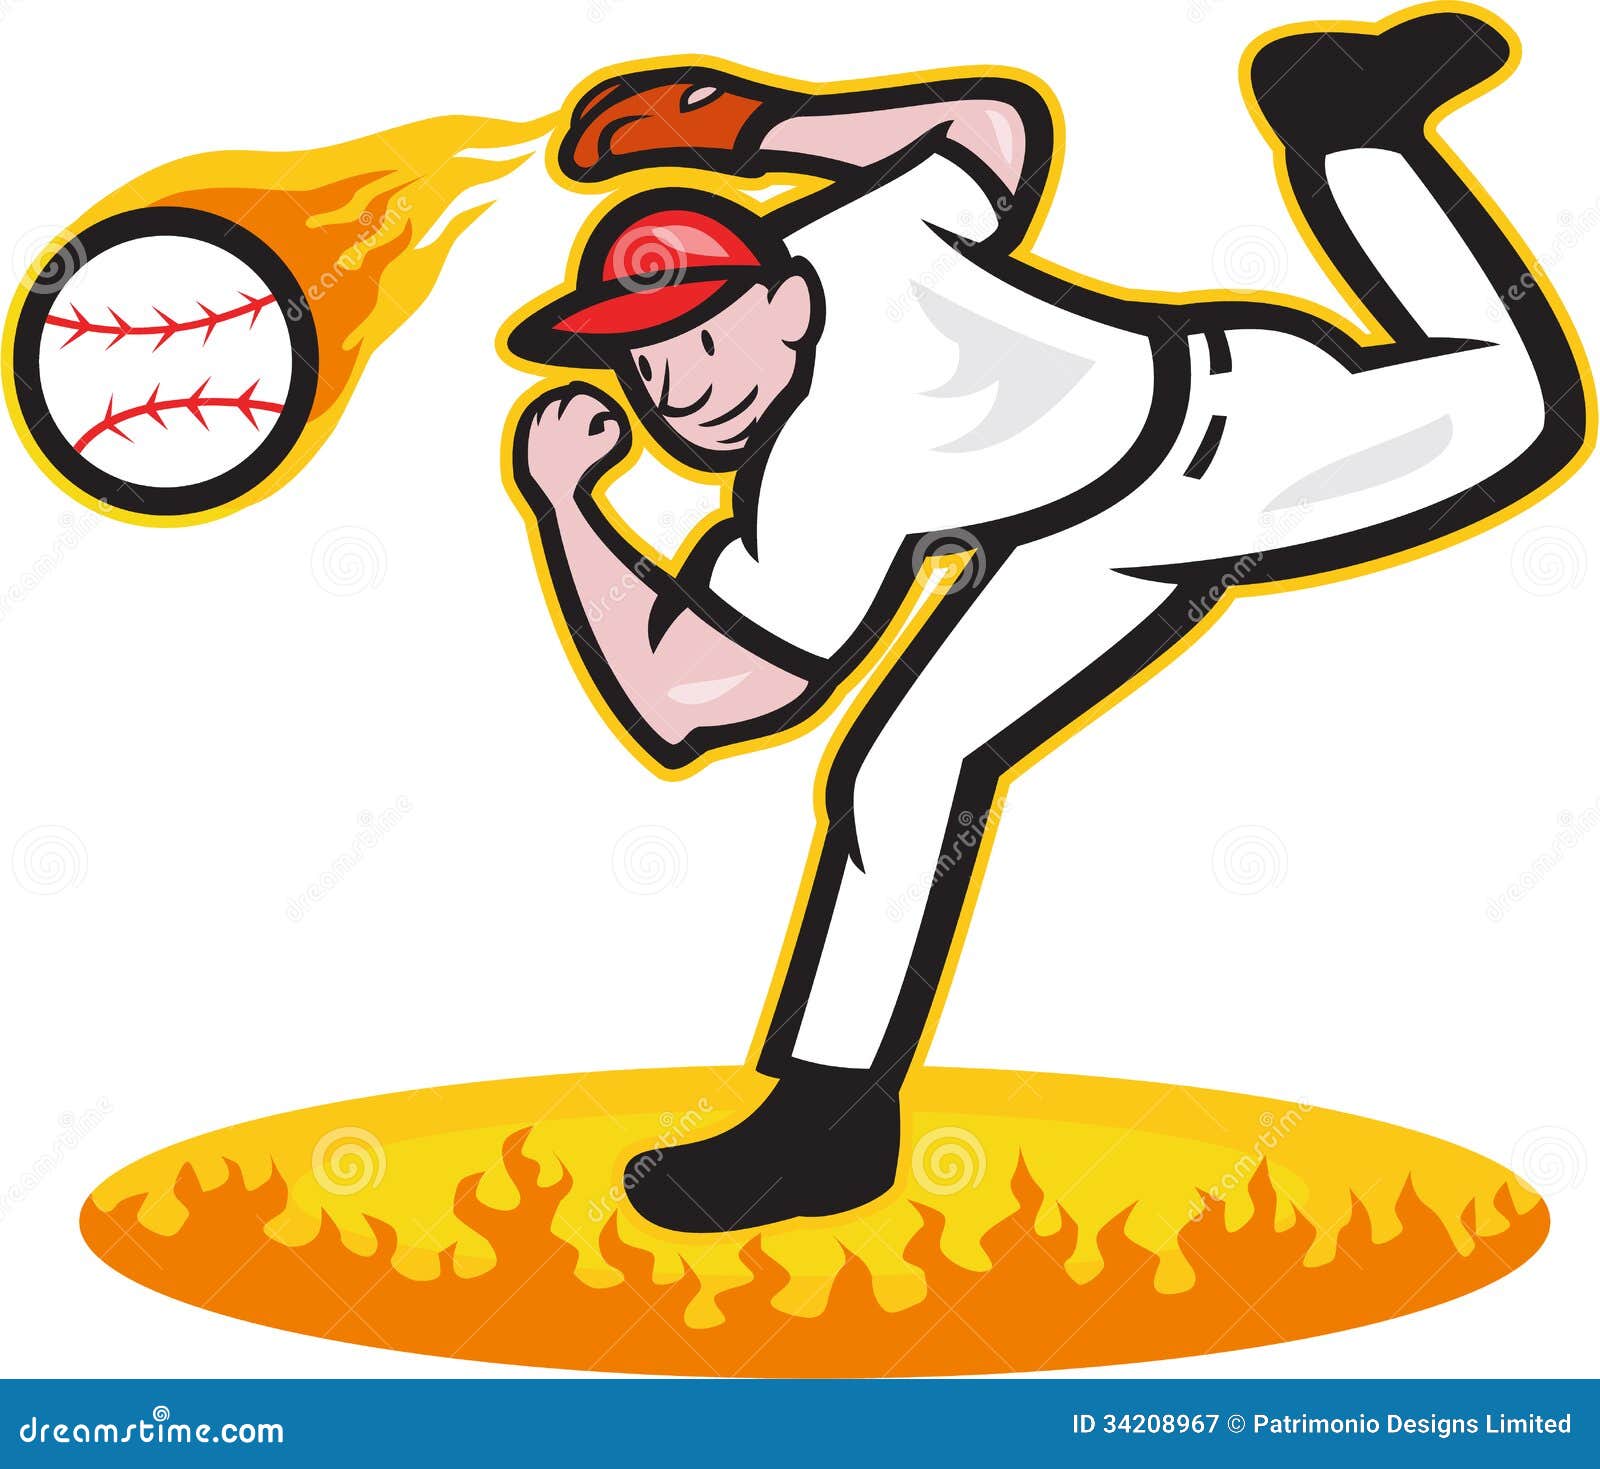 free animated baseball clipart - photo #50